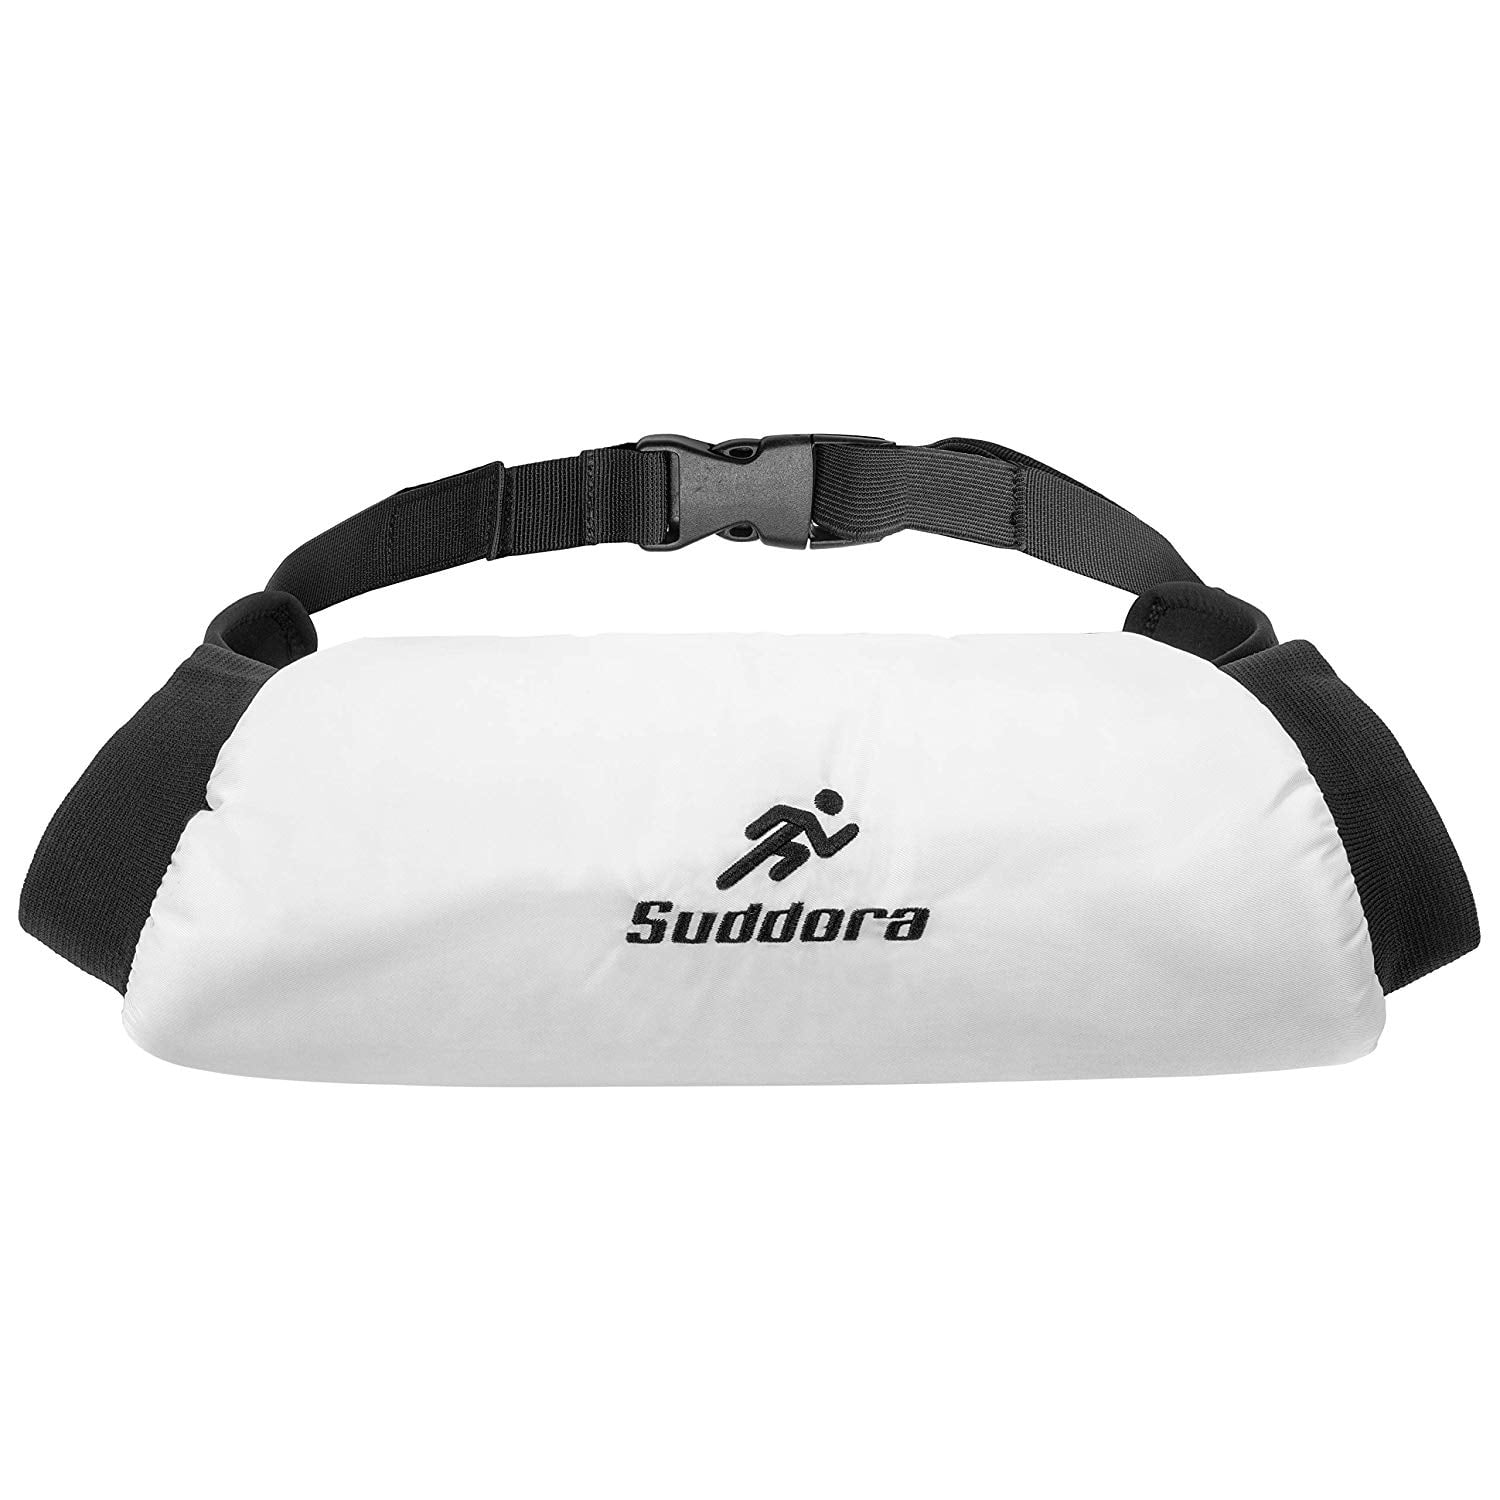 Suddora Football Hand Warmer with Pocket and Waist Strap, White - Walmart.com